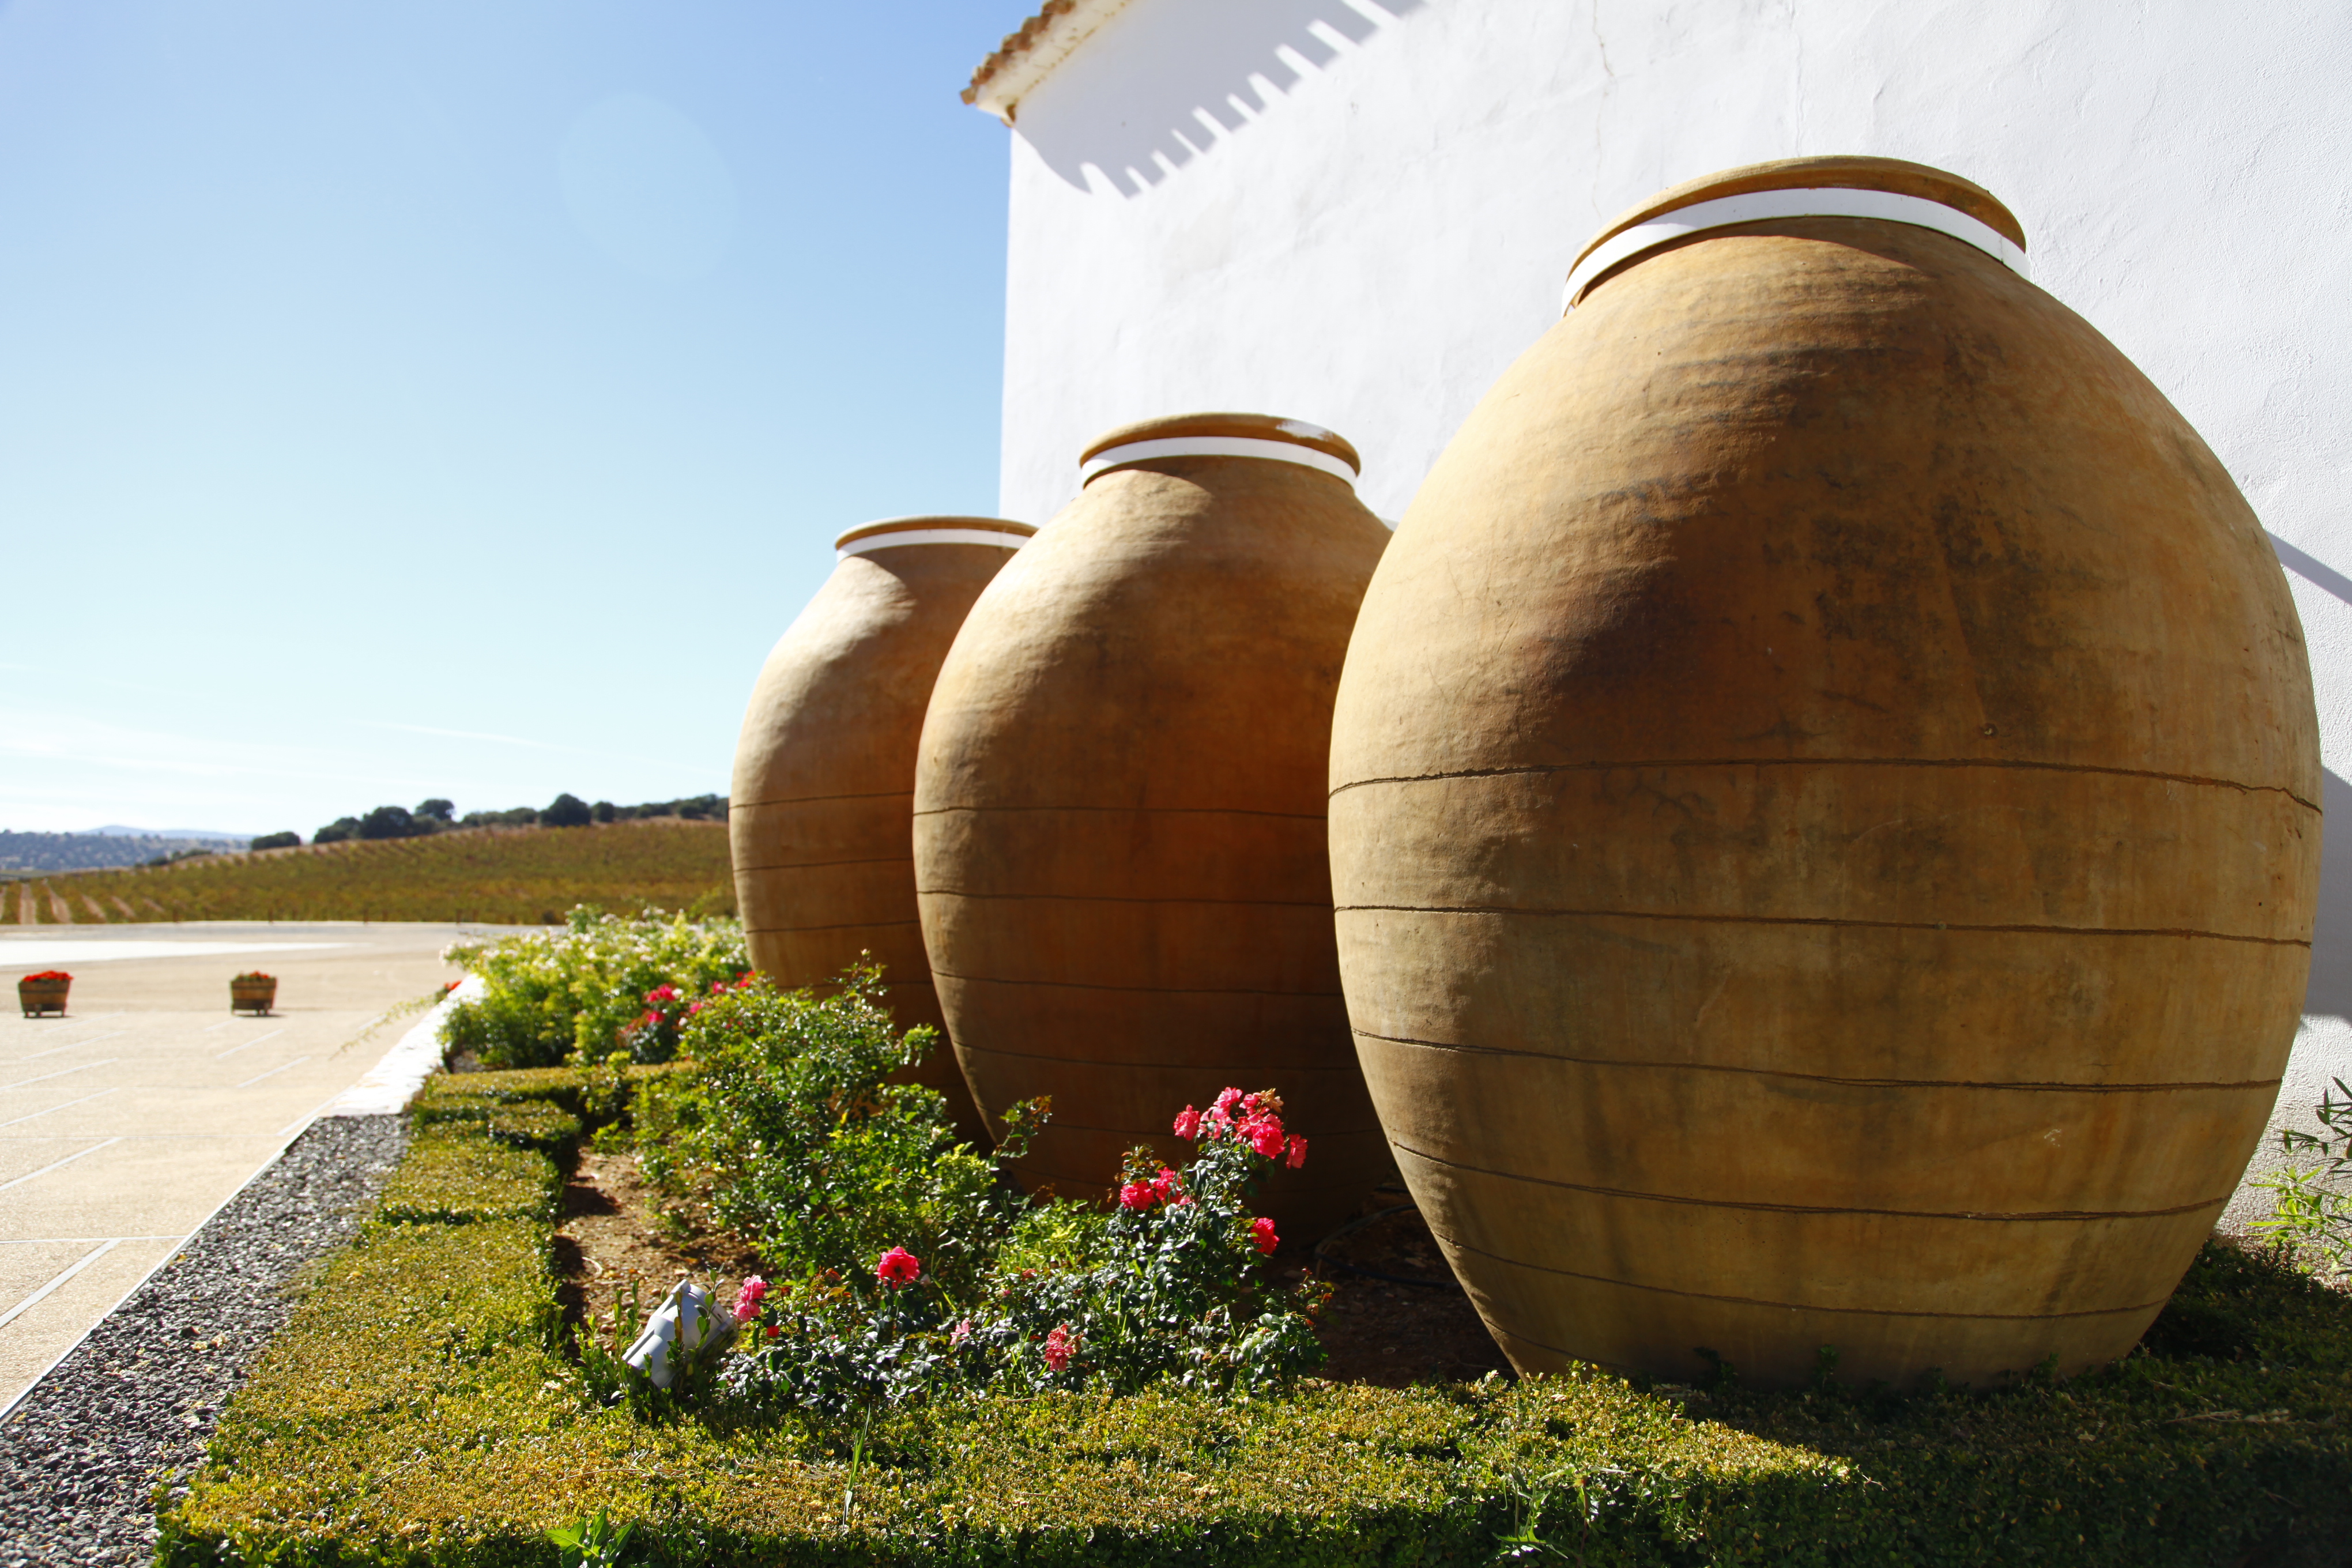 Giant amphoras at Bodegas Real. Photo by Zlata Rodionova